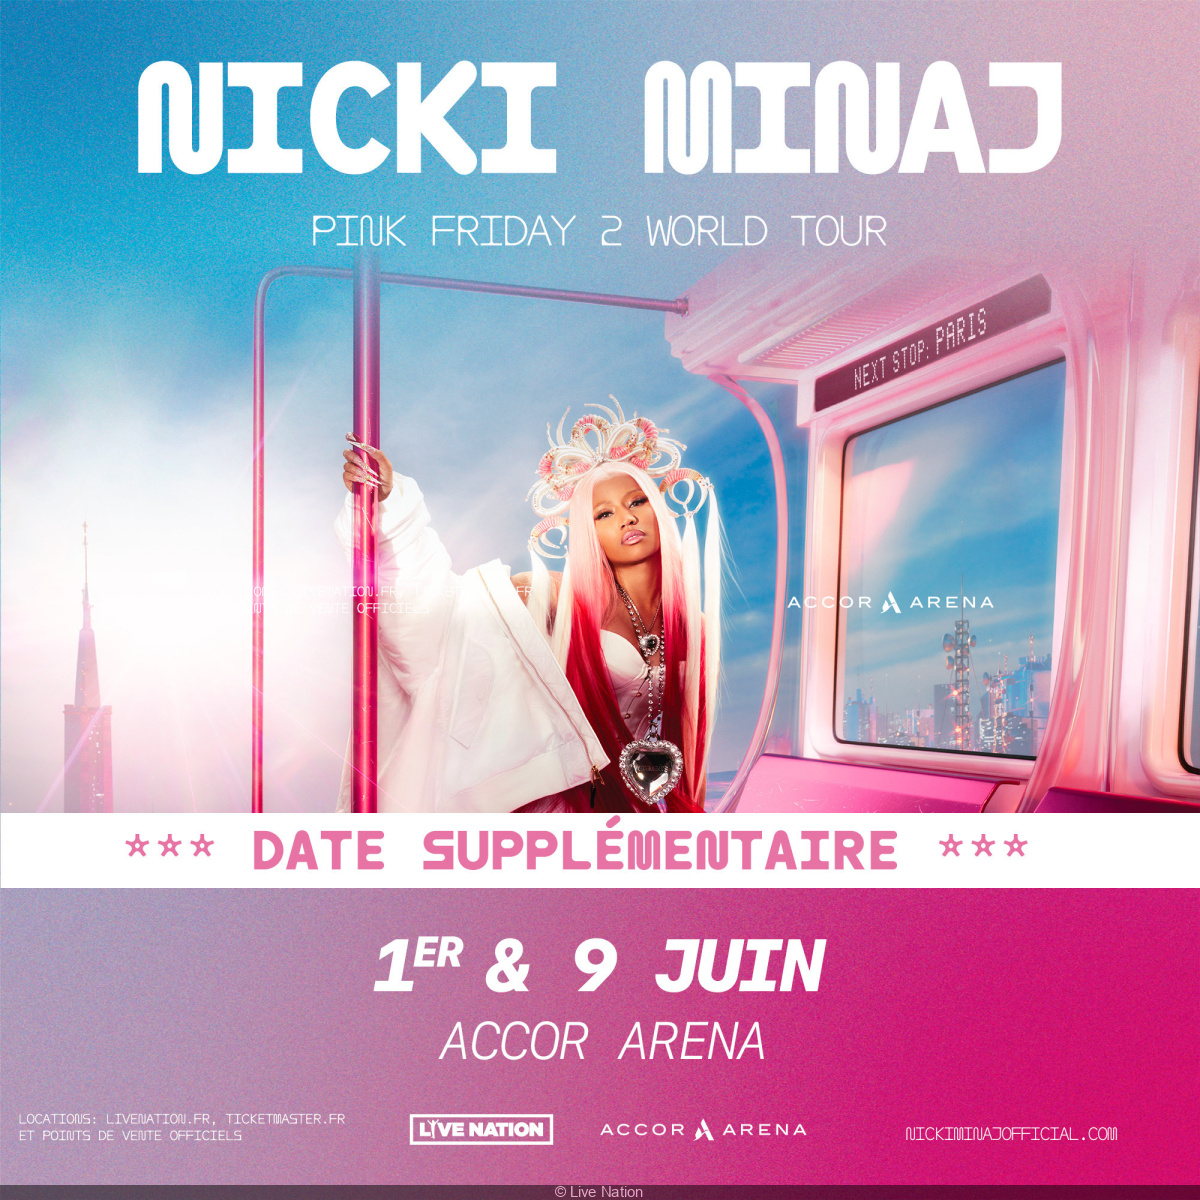 Nicki Minaj in der Accor Arena Tickets